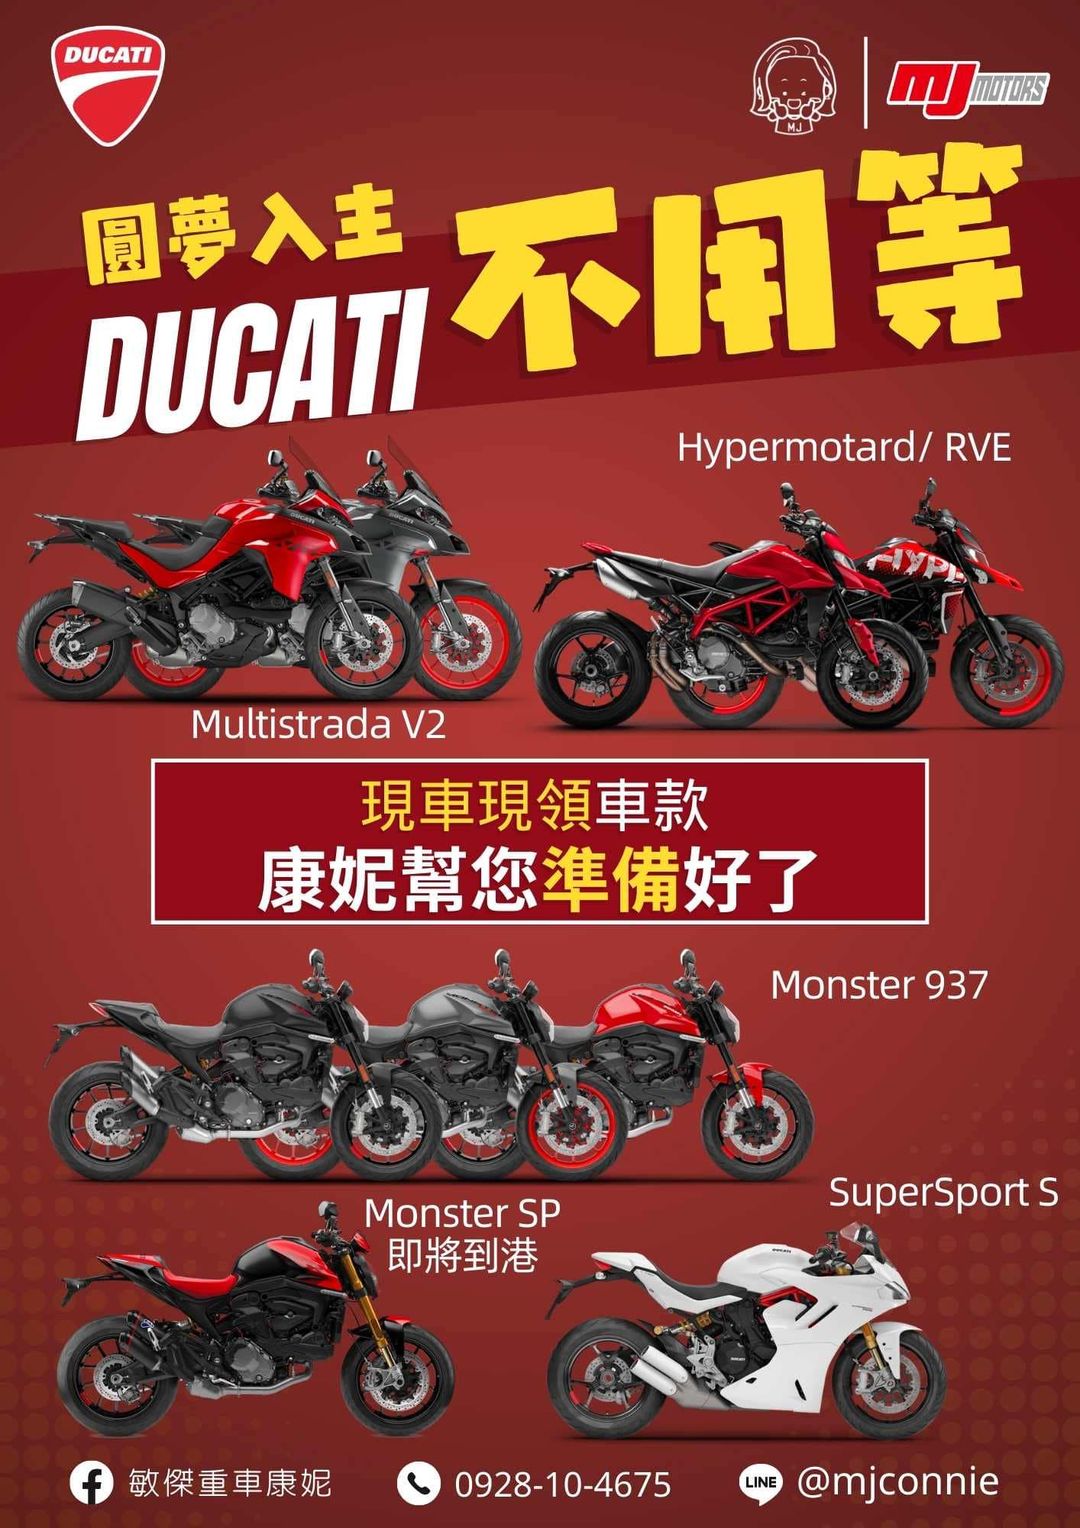 DUCATI SuperSport S新車出售中 『敏傑康妮』買Ducati 免擔心 不用等待 康妮已準備好～幫您圓夢 康妮給您最佳方案 價格依實際為主 | 敏傑車業資深銷售專員 康妮 Connie